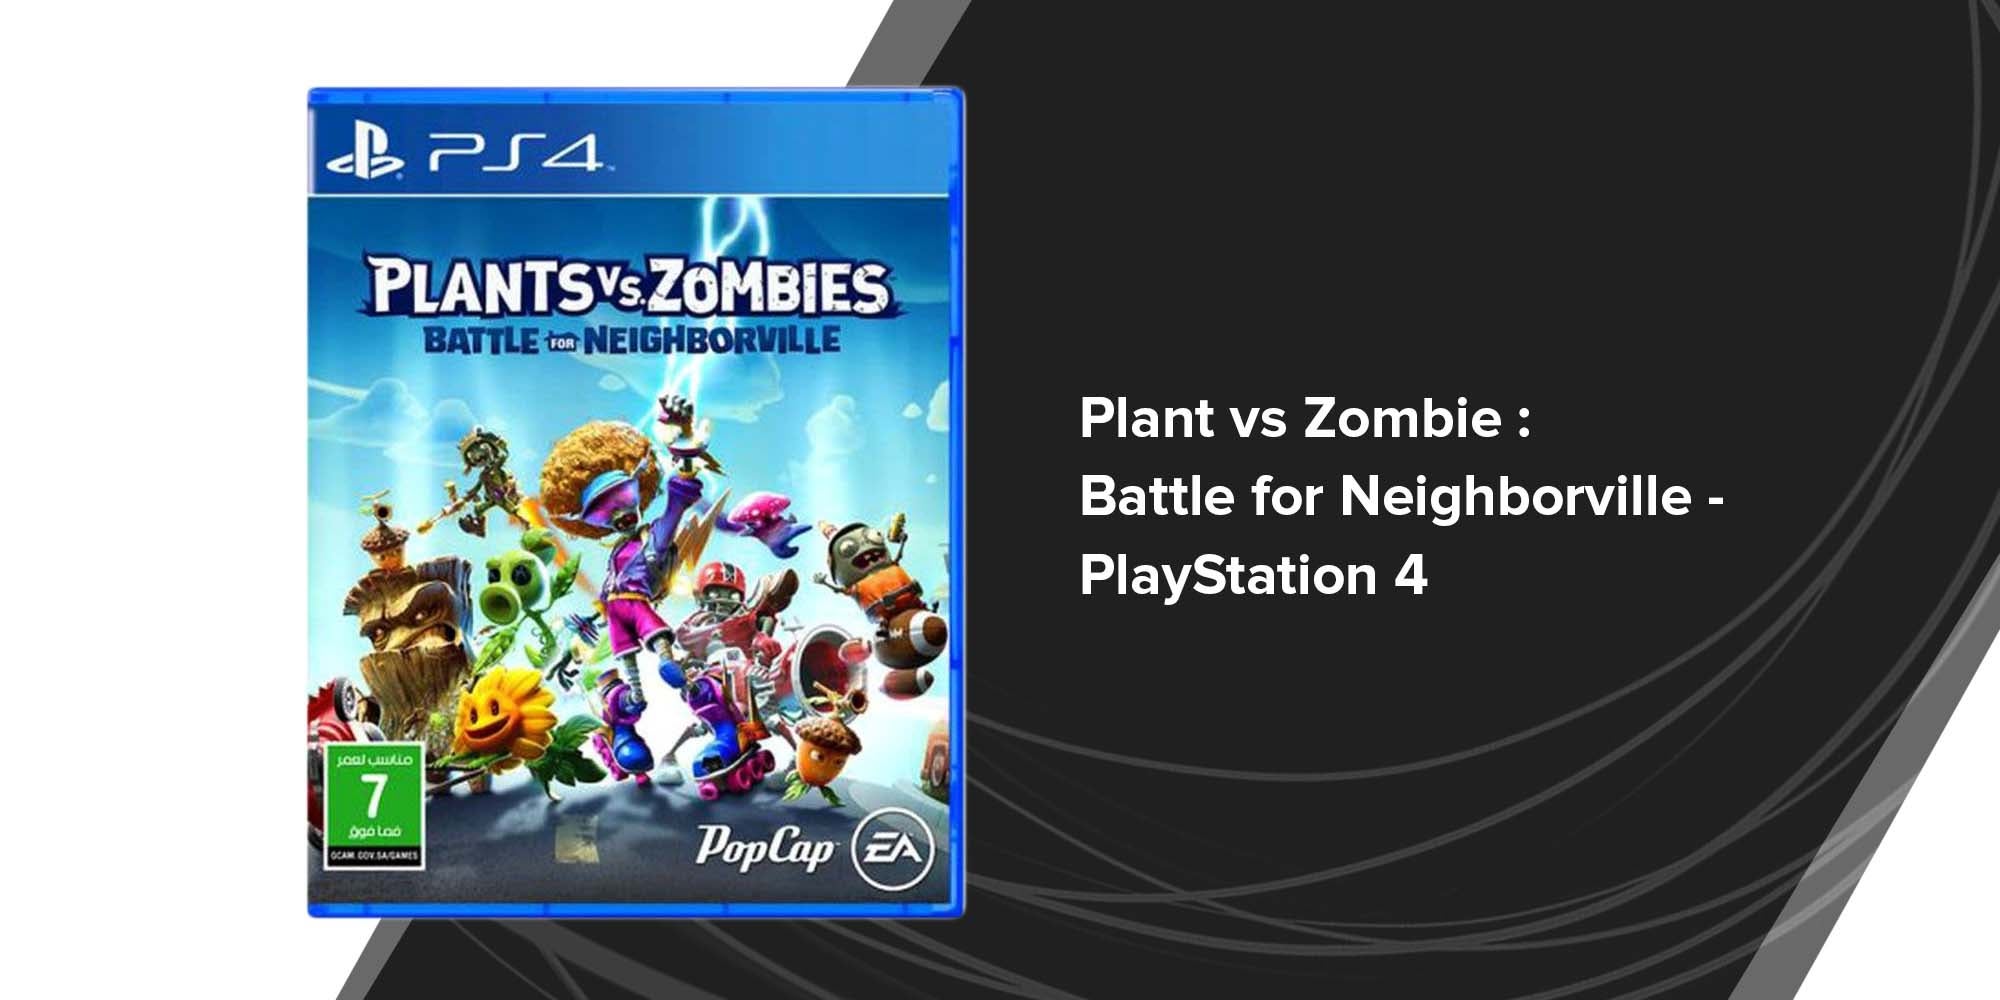 Plant Vs Zombie : Battle For Neighborville - English/Arabic (KSA Version) - PlayStation 4 (PS4)